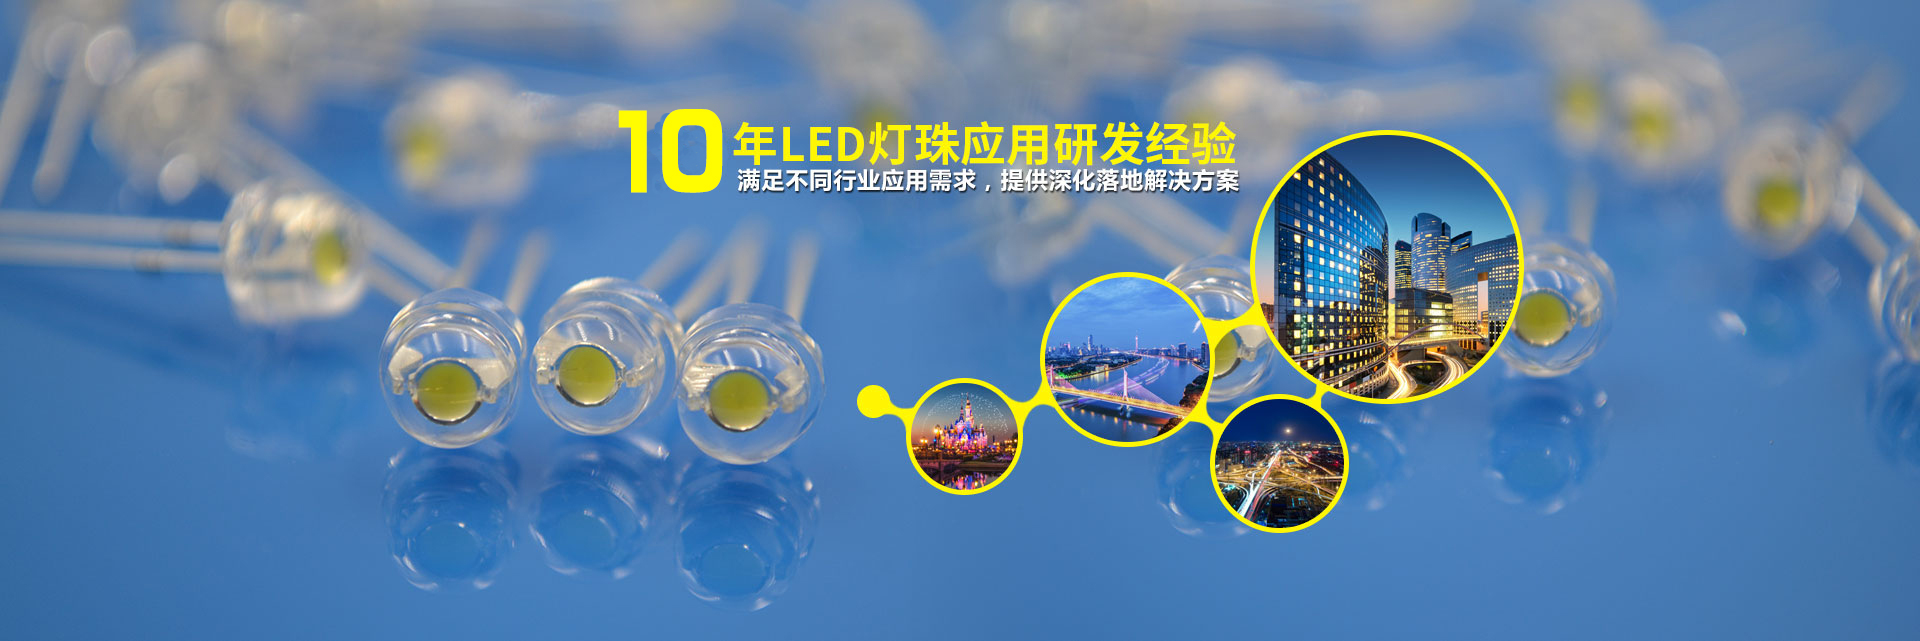 J9九游会品牌-20多年LED灯珠应用研发经验